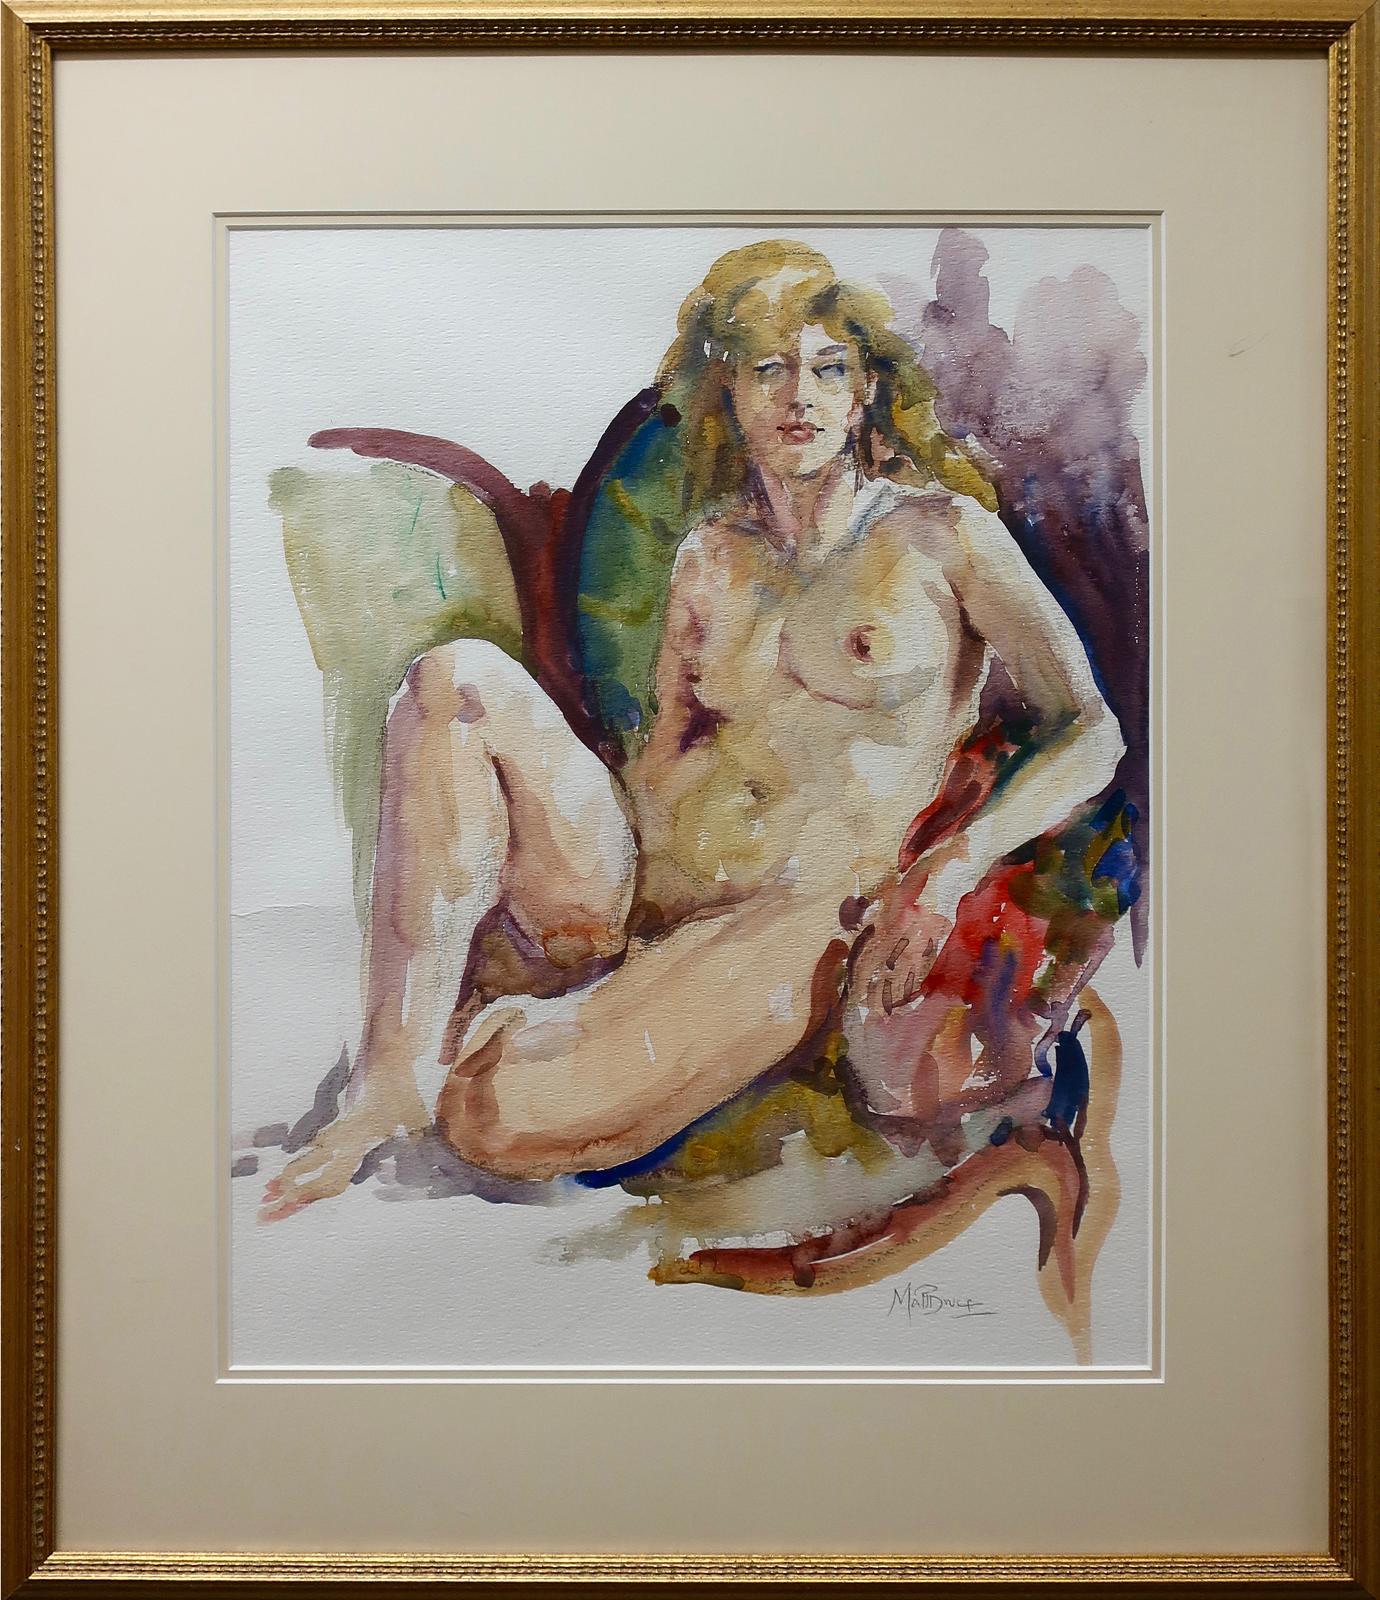 Matt Bruce (1915-2000) - Seated Nude